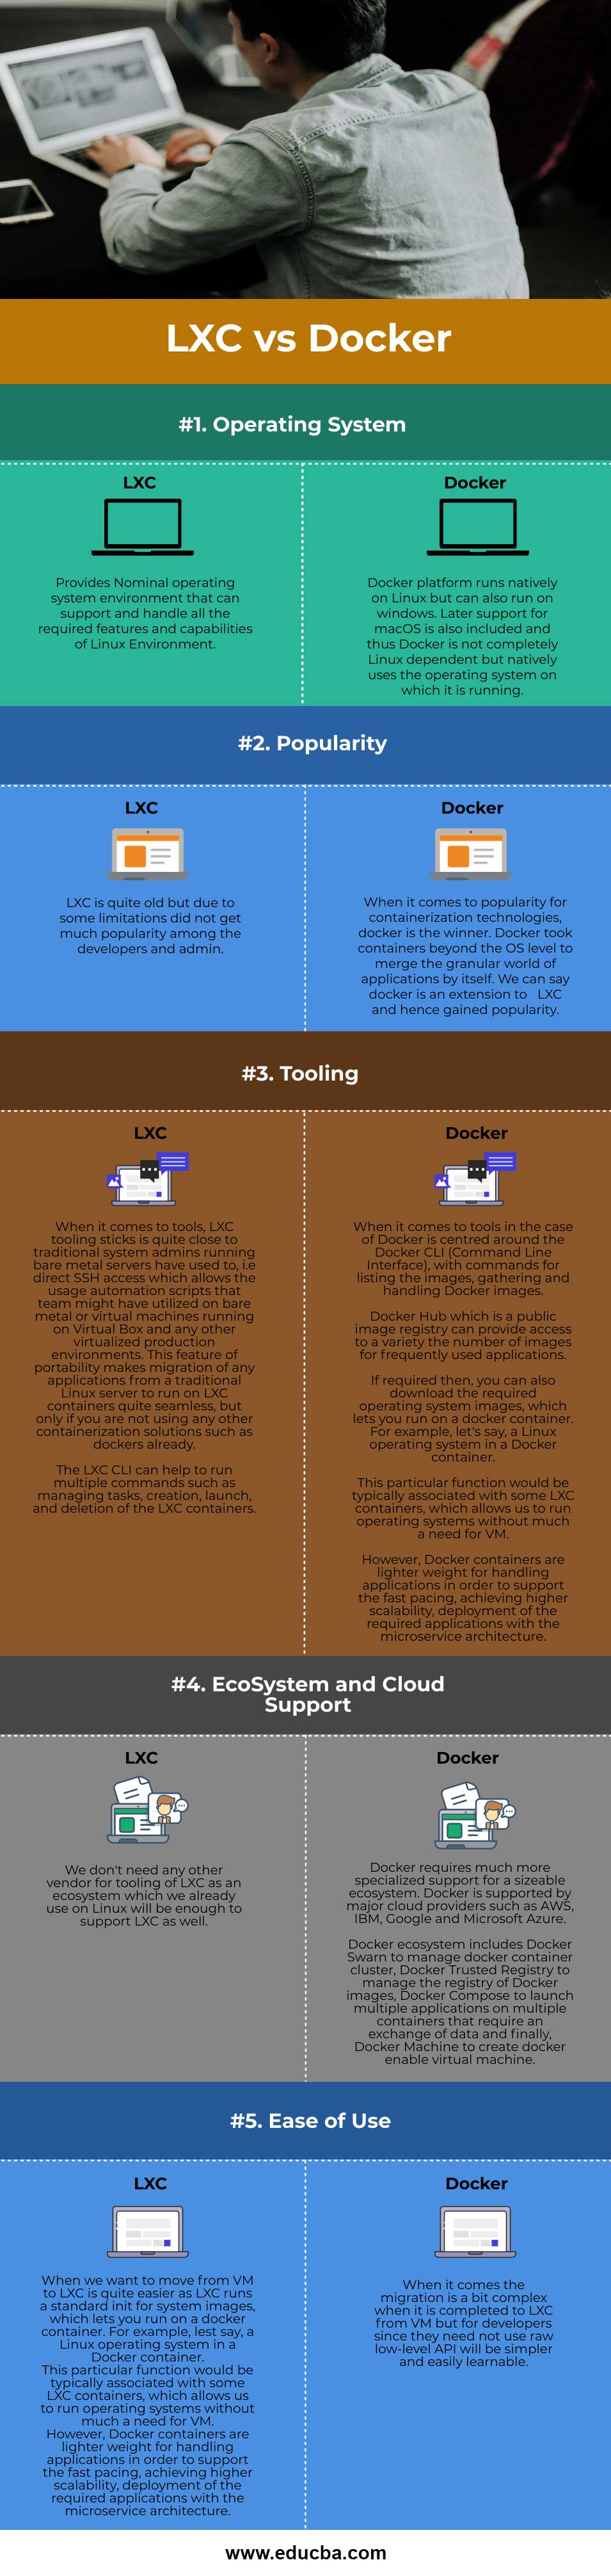 LXC vs Docker info